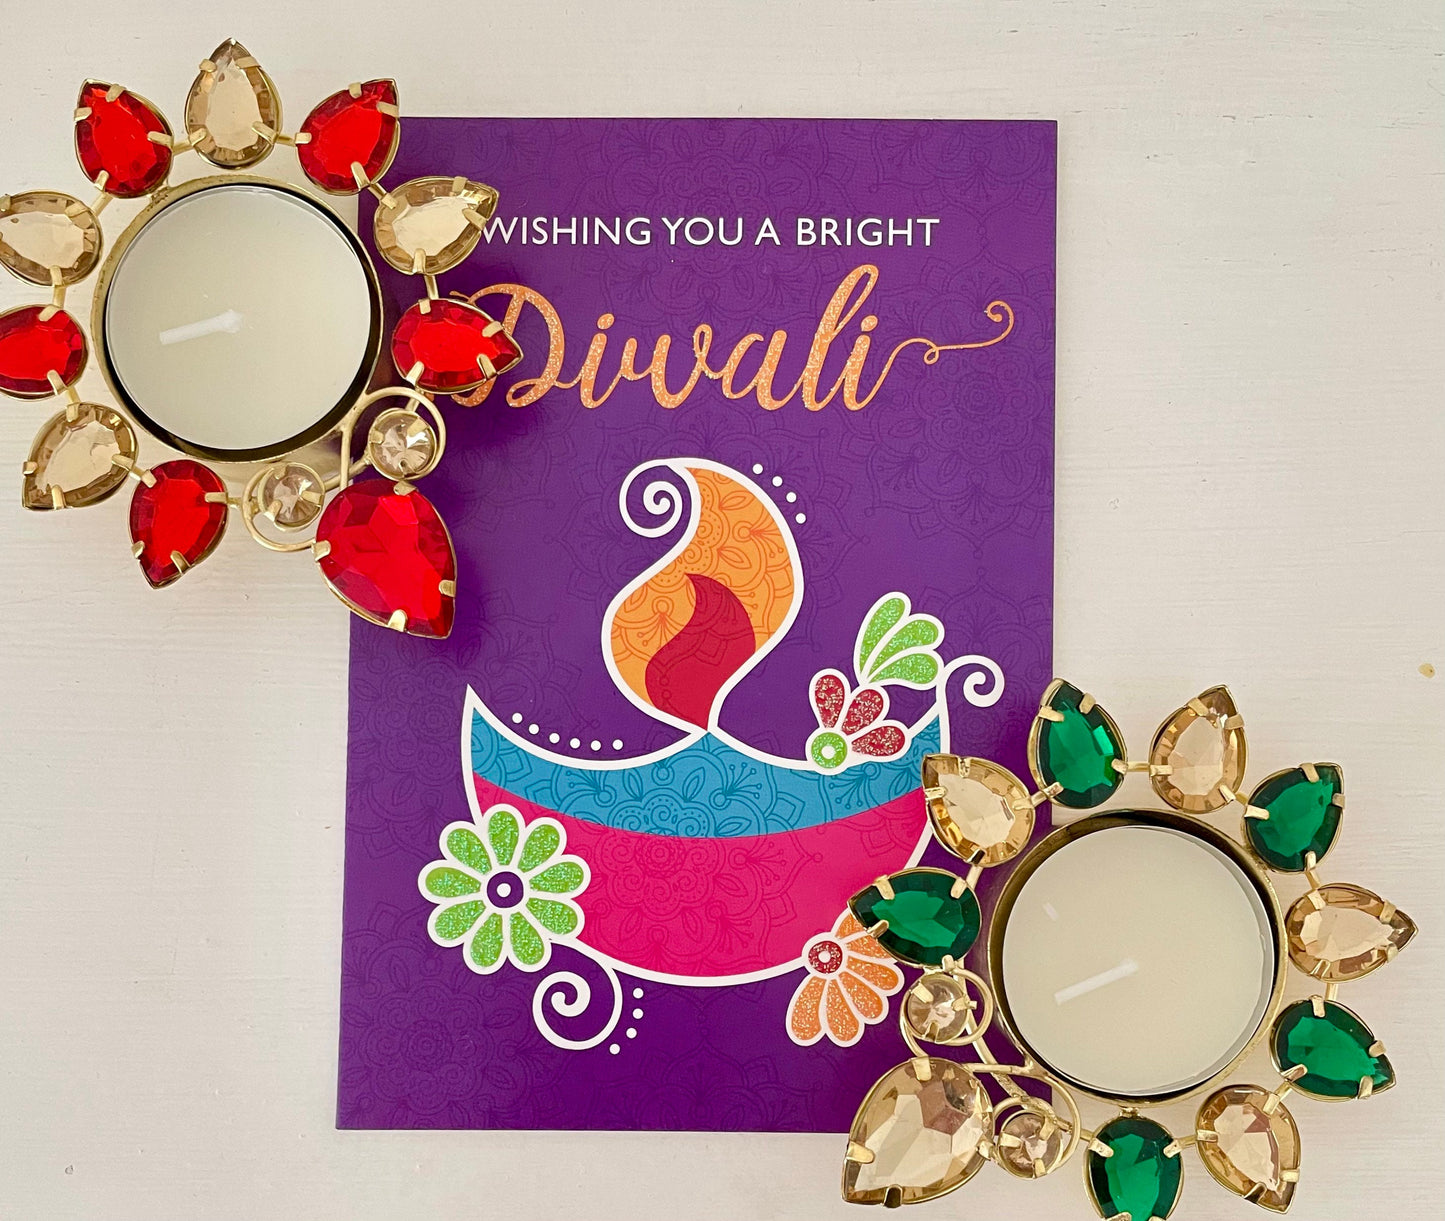 Letter Box Gifts 2 Diwali Tea light Candle Holders Metal Diyas for Diwali, Christmas, Gifting, Home Decor for Decorating Mehendi Thaal